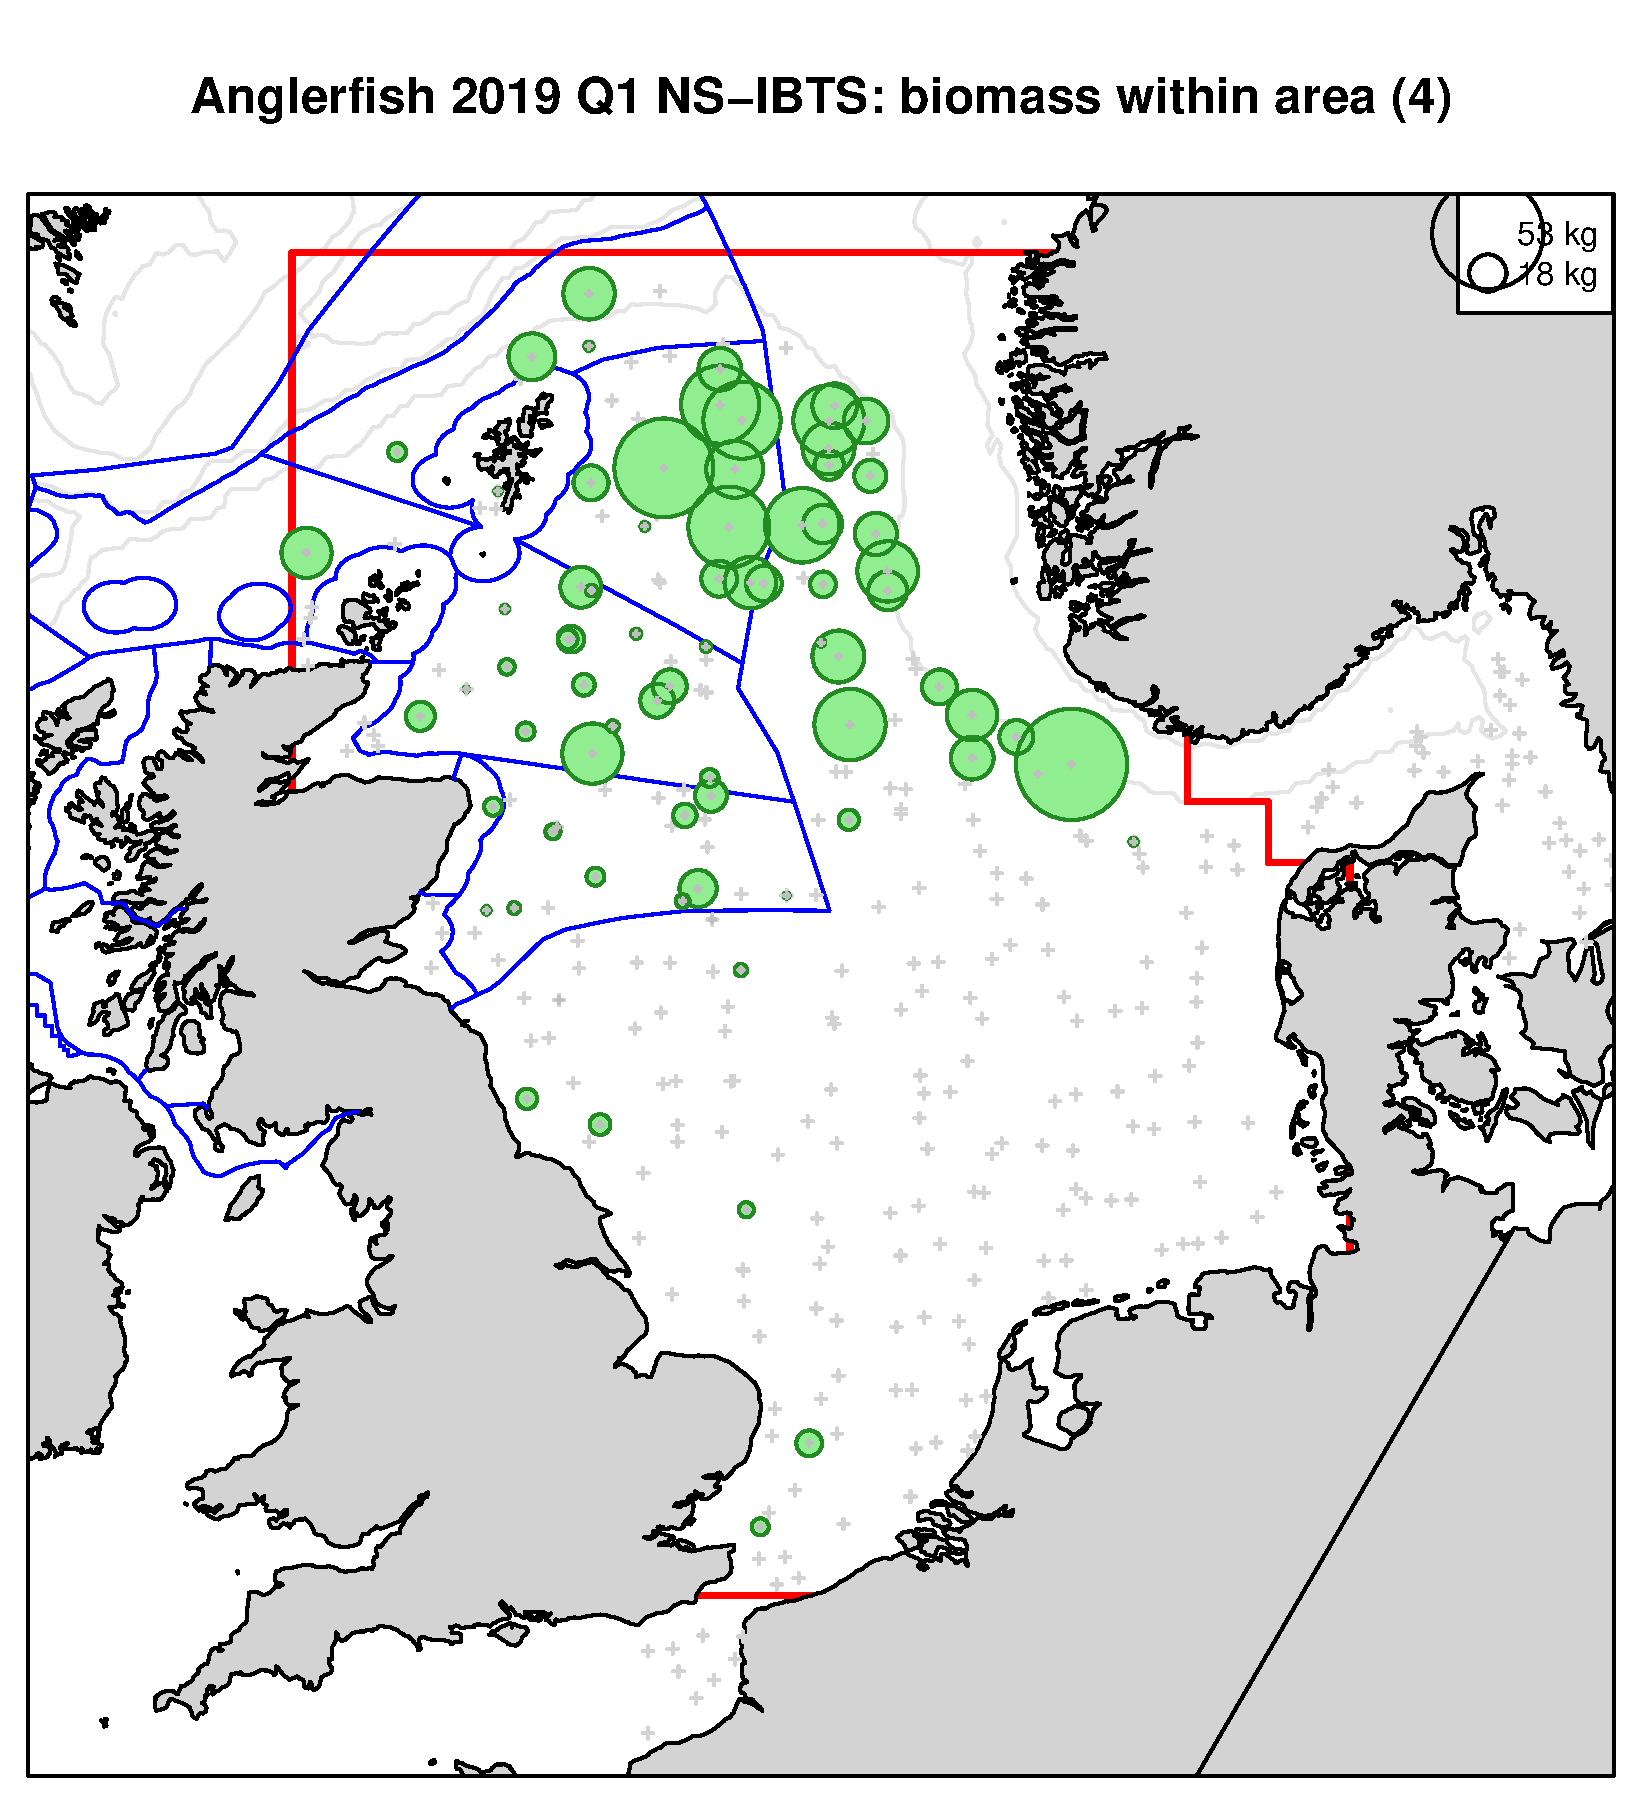 Monkfish 2019 Q1 NS-IBTS: biomass within area (4)